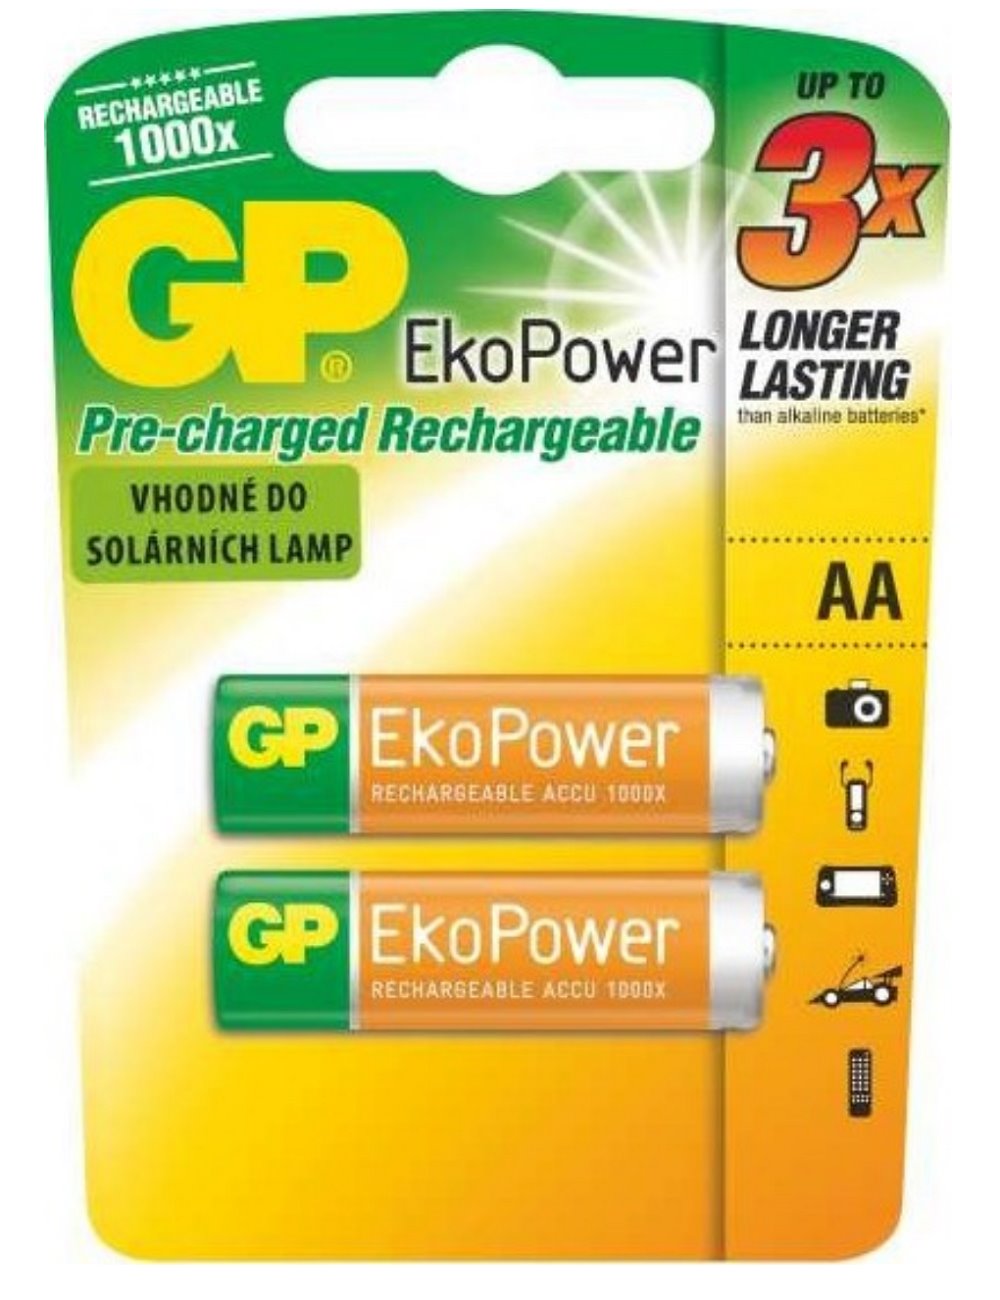 Rechargeable battery GP Ekopower AA 2pcs 1000mAh